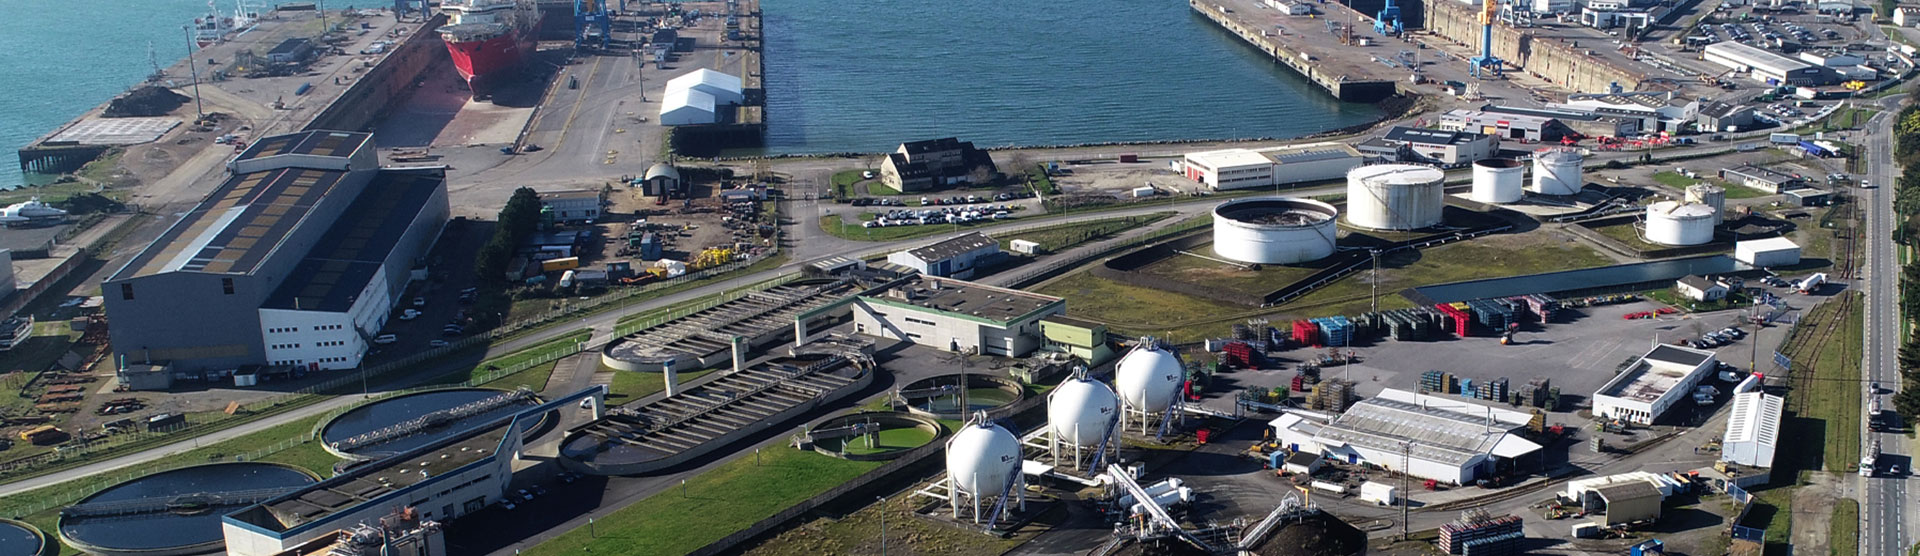 Vue aerienne des installations du Port de Brest